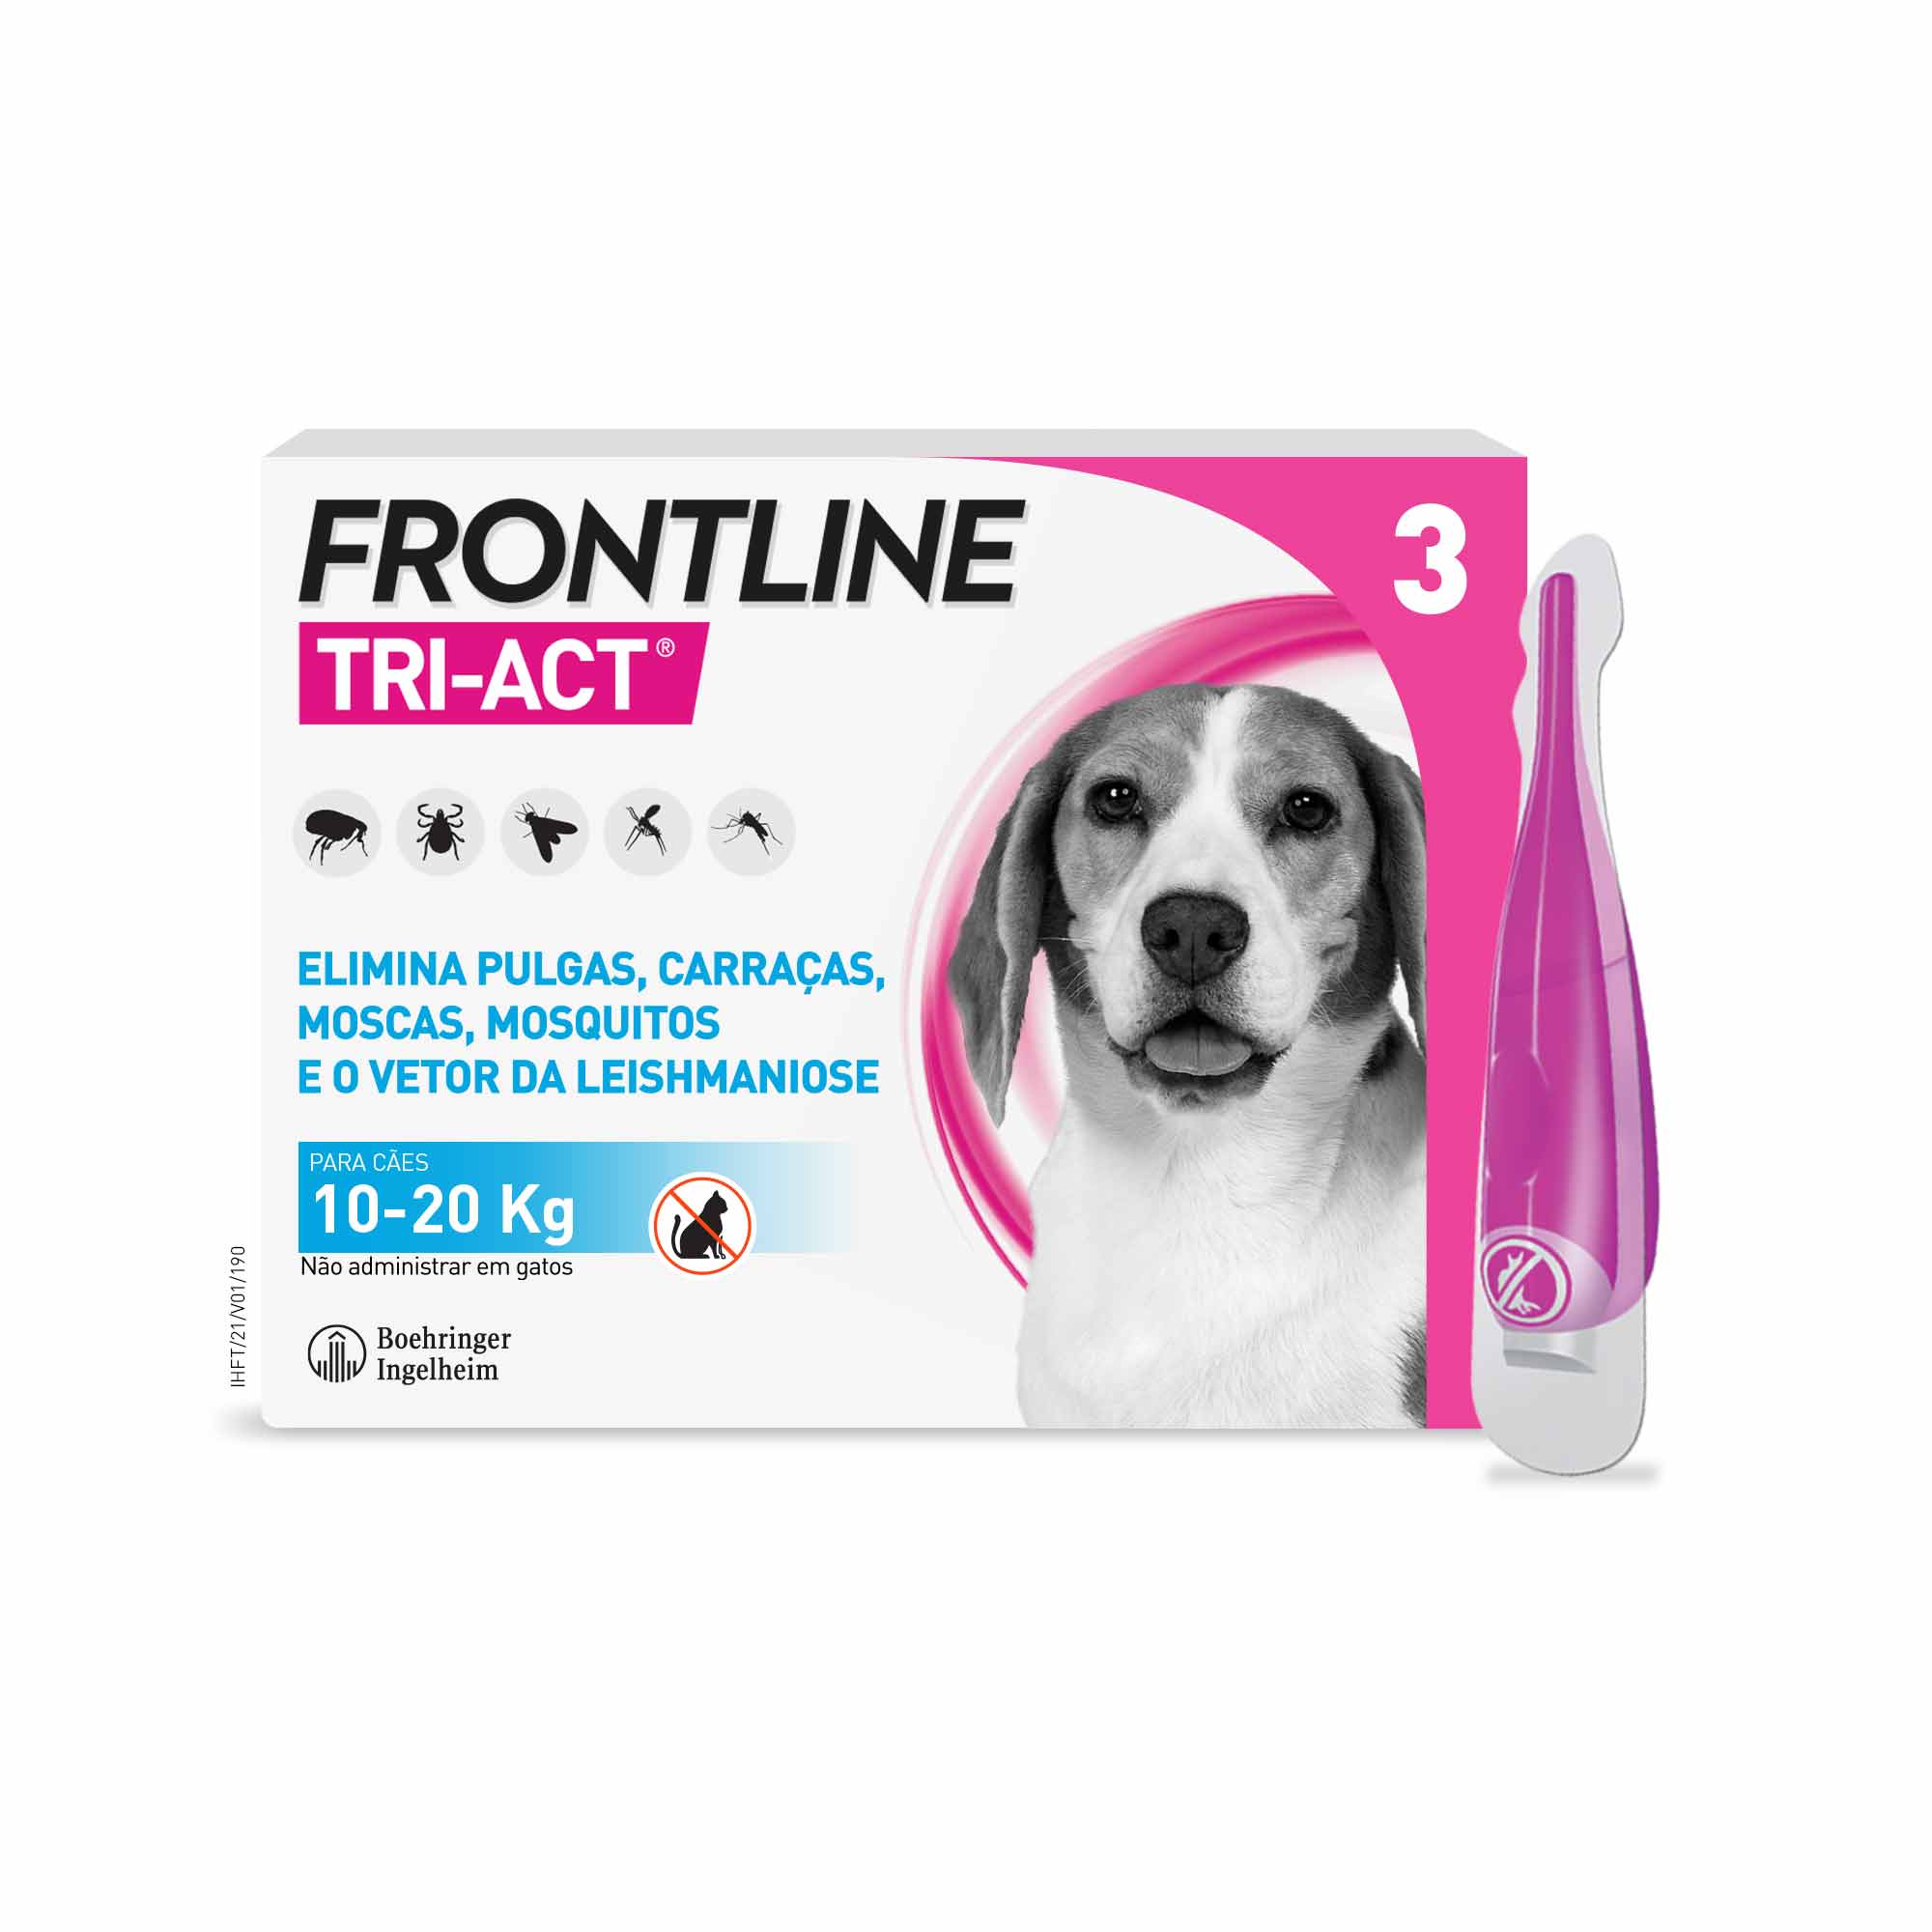 FRONTLINE TRI-ACT CÃO 10-20 KG X 3